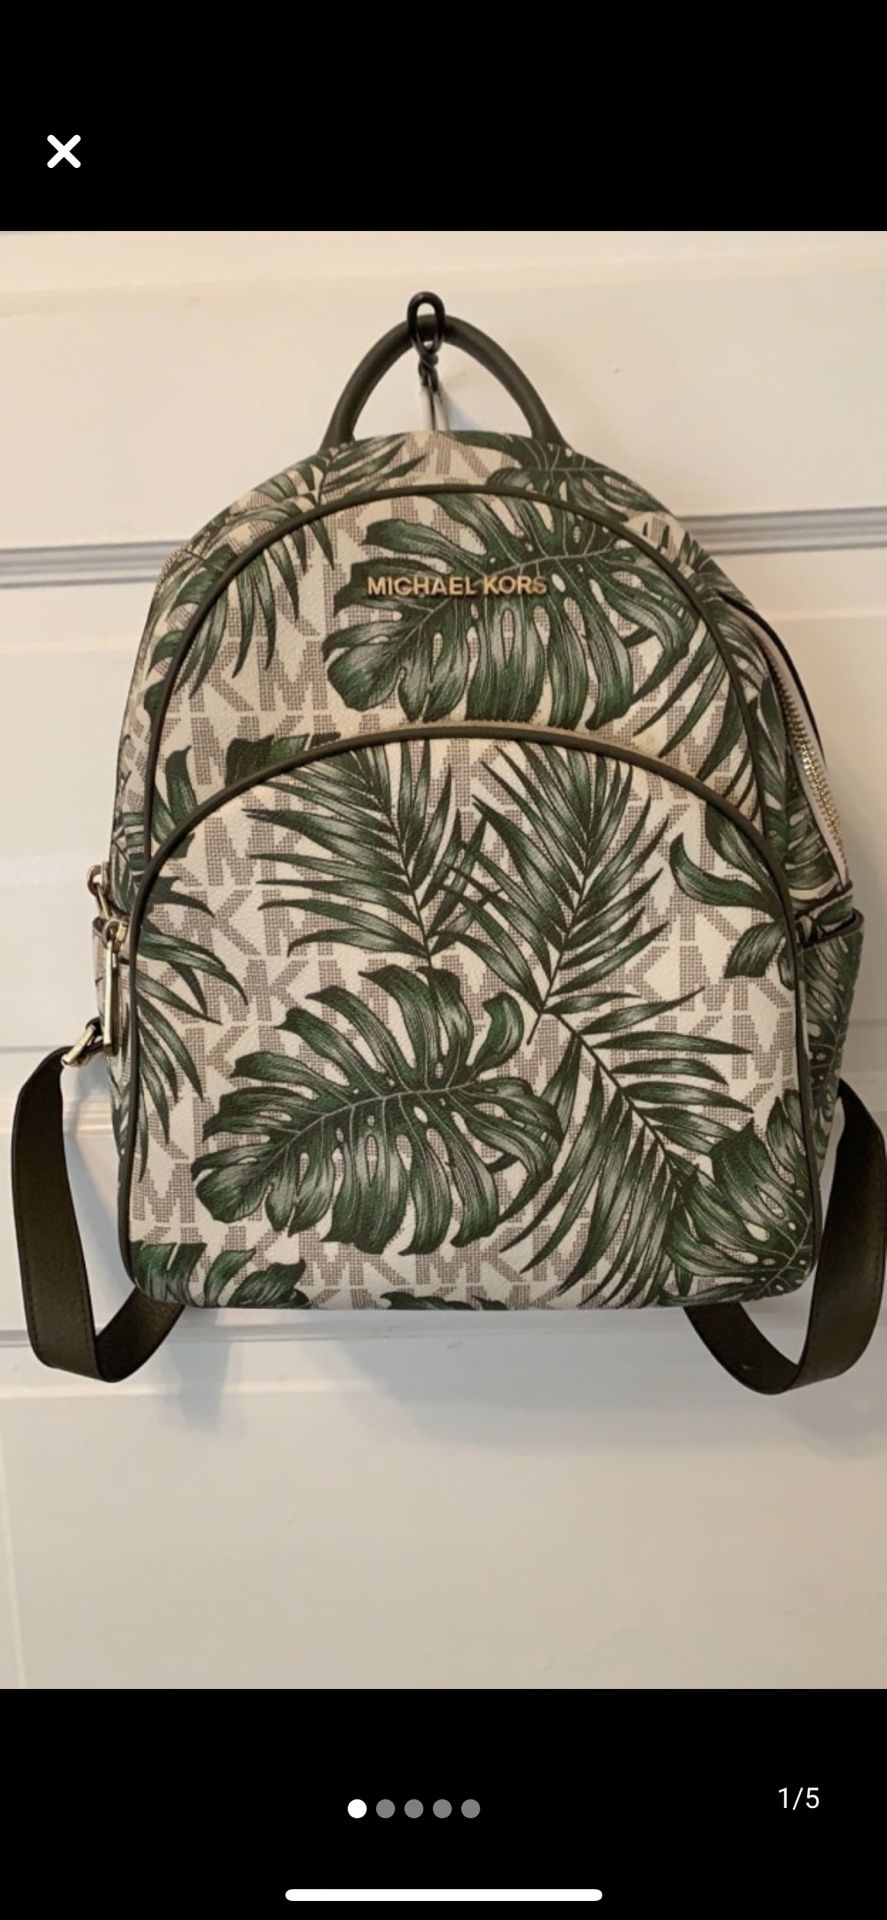 Michael Kors medium backpack purse